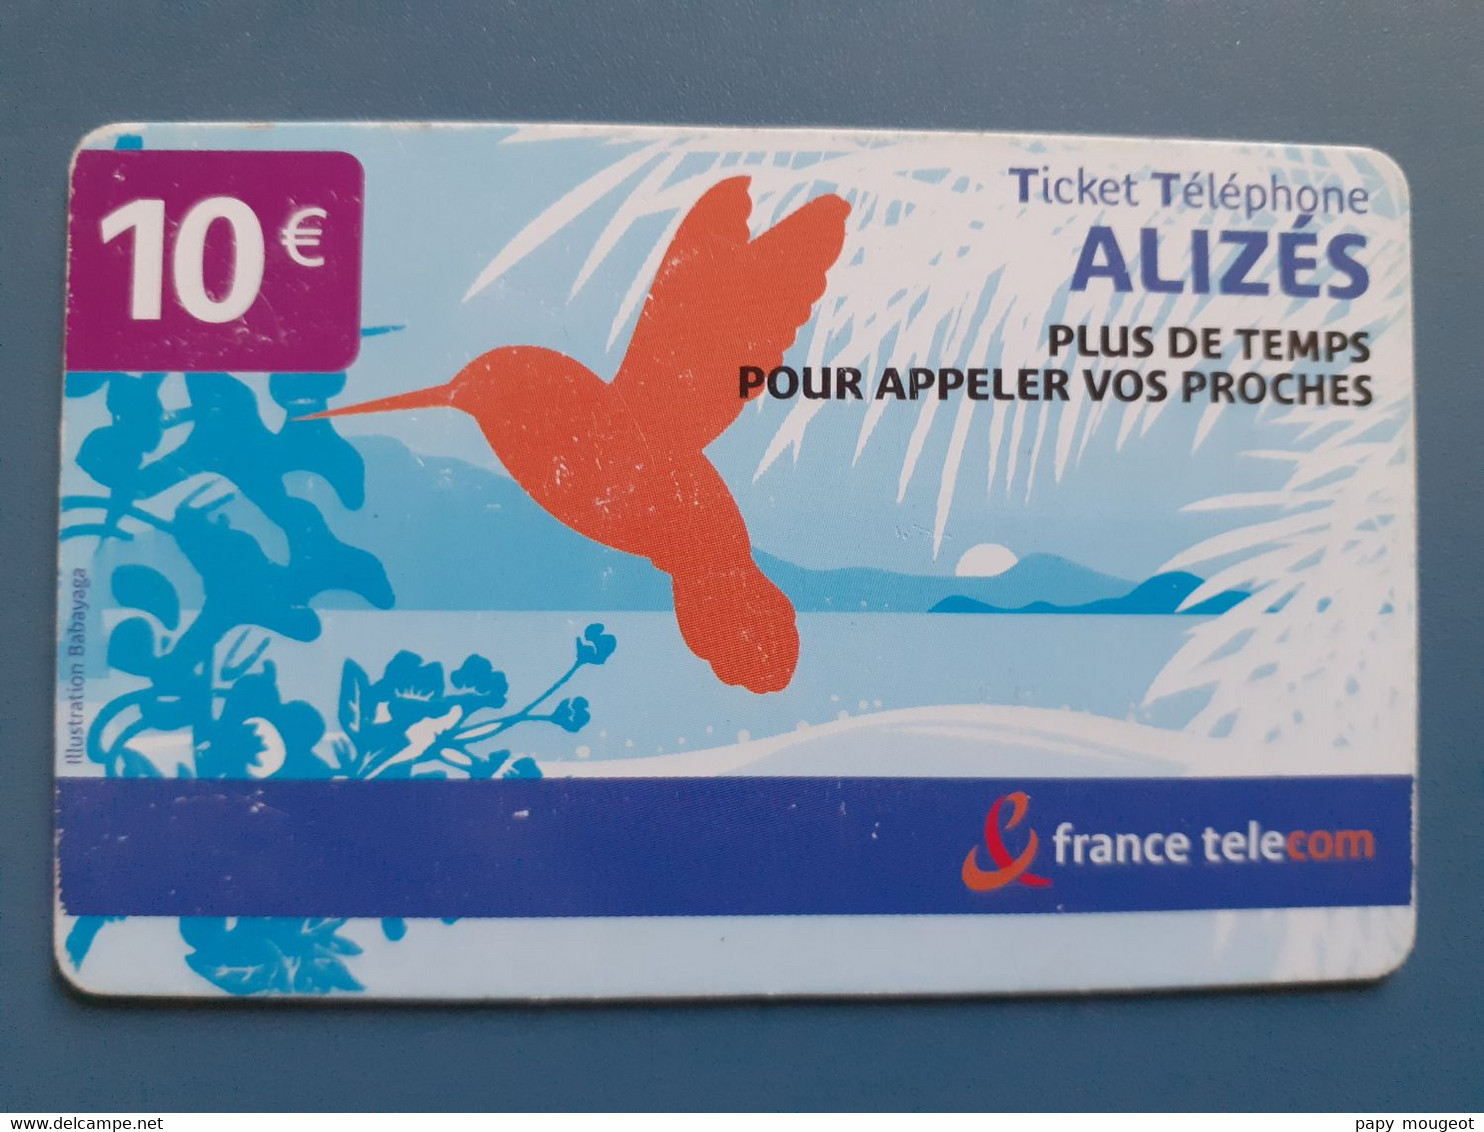 Ticket Téléphone Alizés France Télécom 10€ Validité 31/01/2008 - Série W 58350026346 - FT